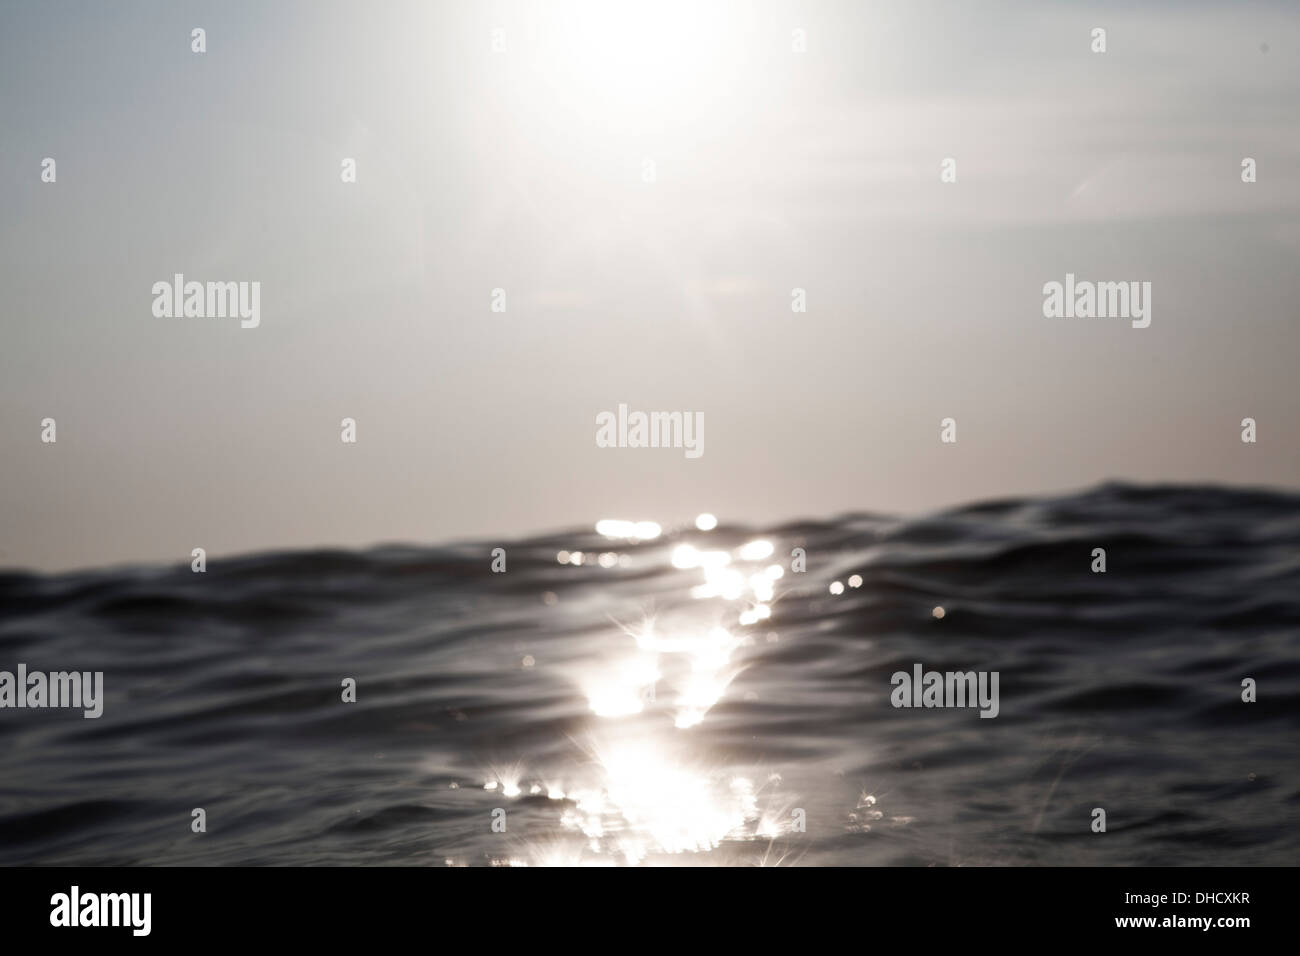 Croatia, Mediterranean Sea, ocean, waves at sunlight Stock Photo